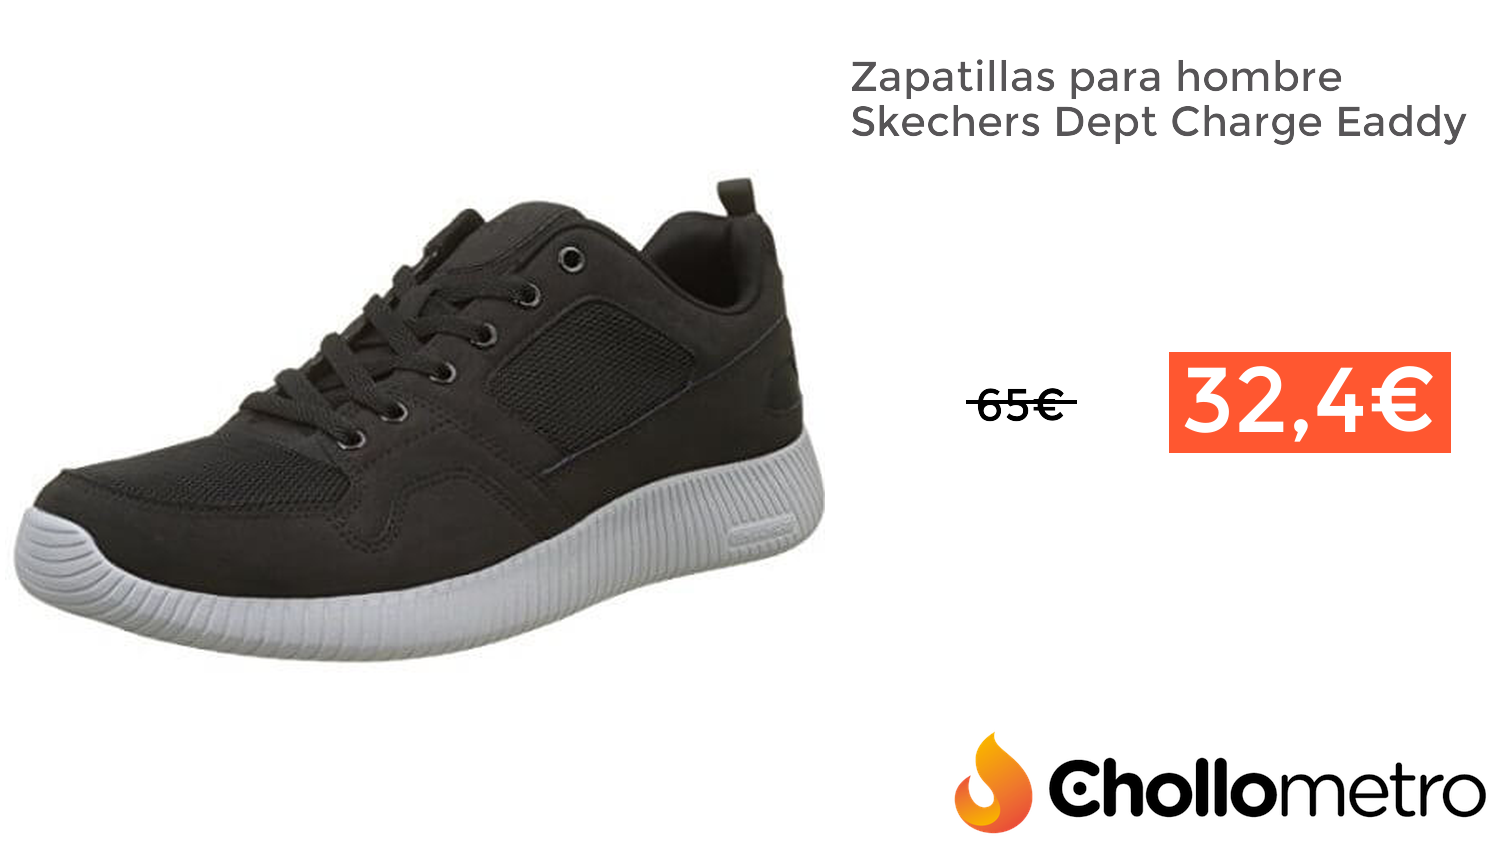 Limo Discriminación sexual Borradura Chollometro on Twitter: "#CHOLLO Zapatillas para hombre Skechers Dept  Charge Eaddy por 32,4€ ➡️ https://t.co/Hzsgx5l8N6 https://t.co/OVcQgKeDON"  / Twitter